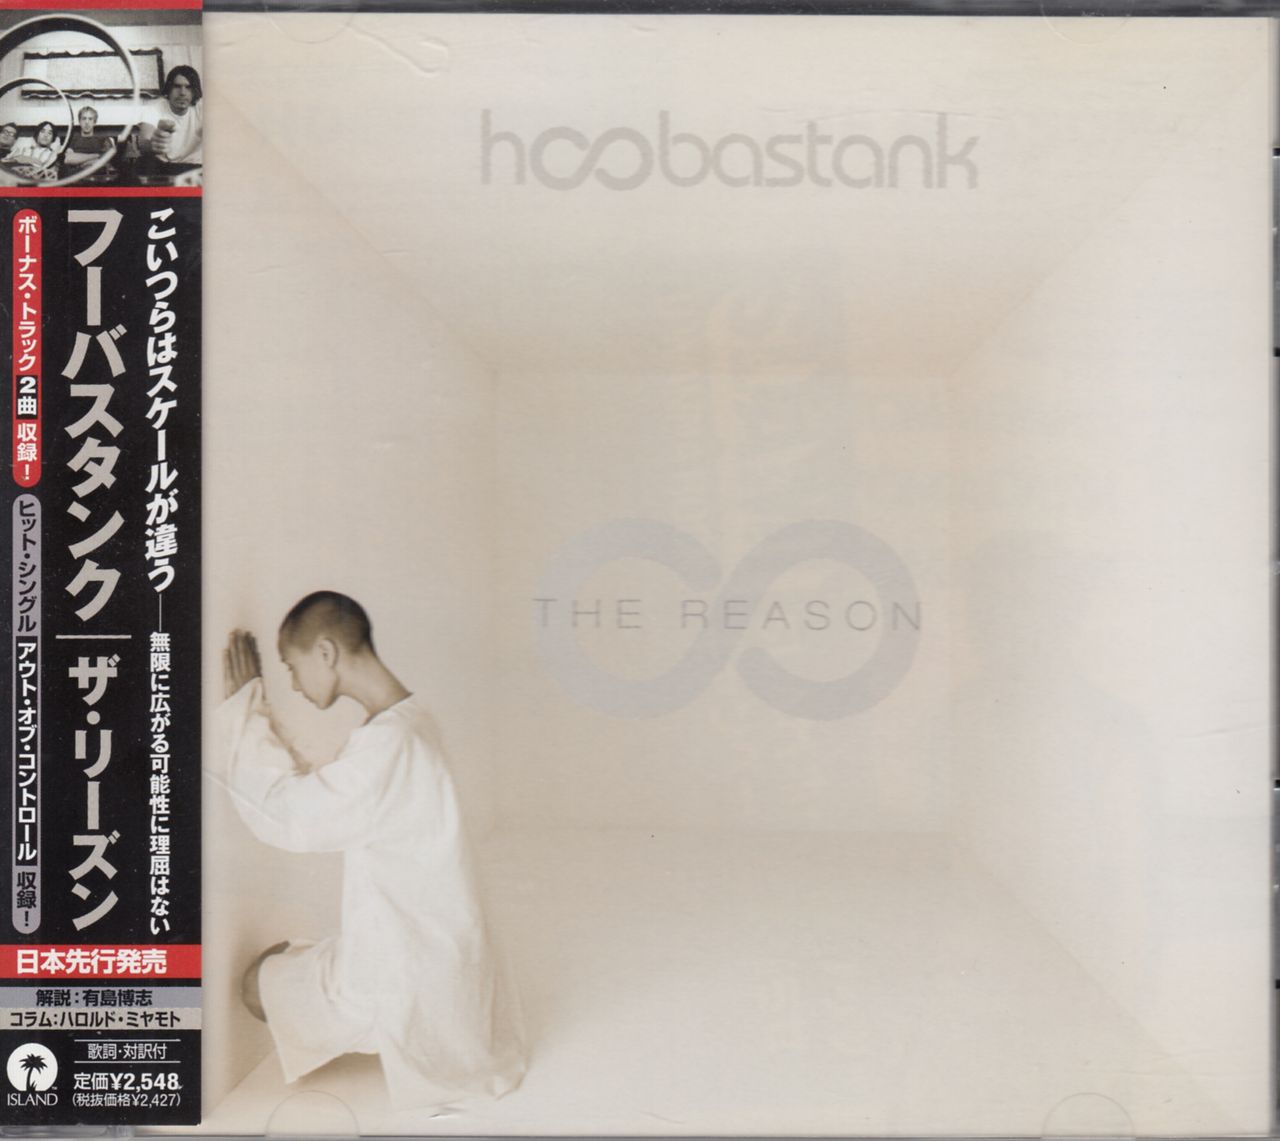 Hoobastank The Reason Japanese CD album —